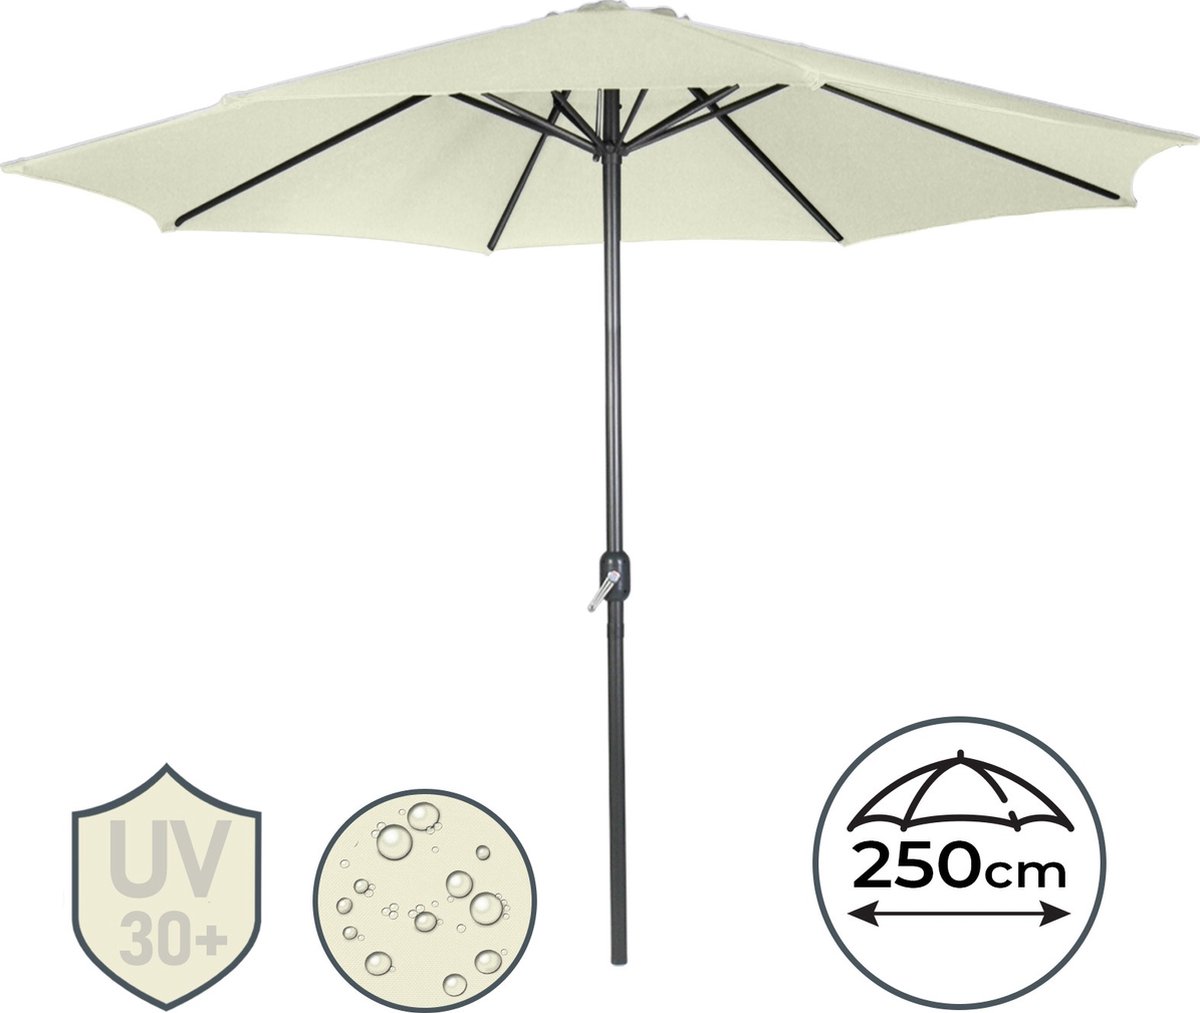 Miadomodo - Staande Parasol voor Balkon, Terras of Tuin - Diameter 250 cm - Handzwengel - Waterafstotend - Tuinparasol - Terrasparasol - Balkonparasol - Crème